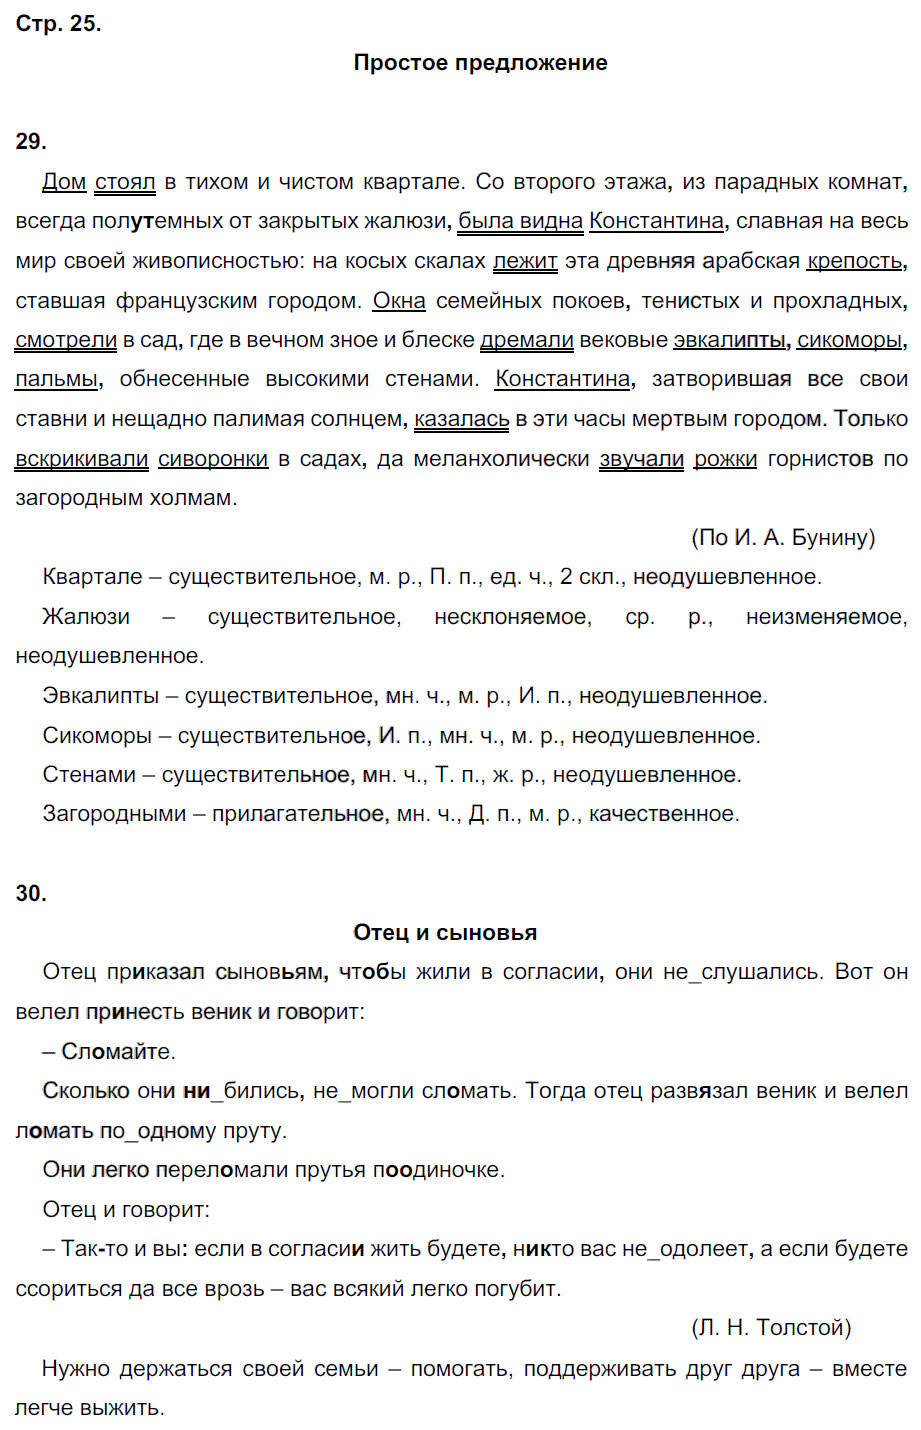 гдз 8 класс рабочая тетрадь страница 25 русский язык Кулаева